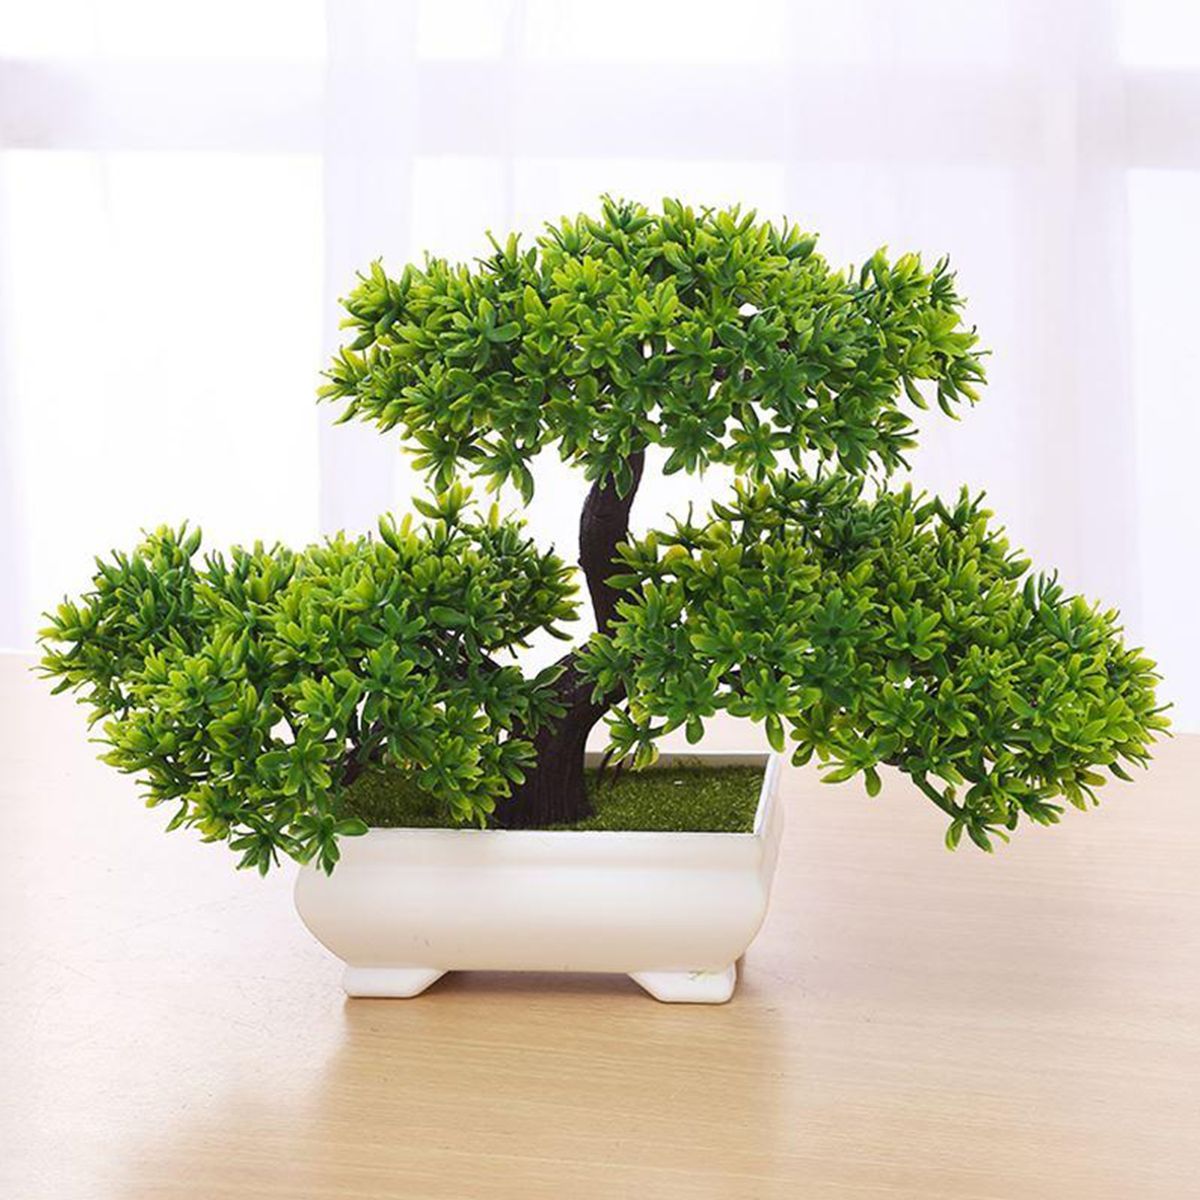 Bonsai-Tree-with-Pot-Artificial-Plant-Decoration-for-Home-Office-Desk-18cm-1741281